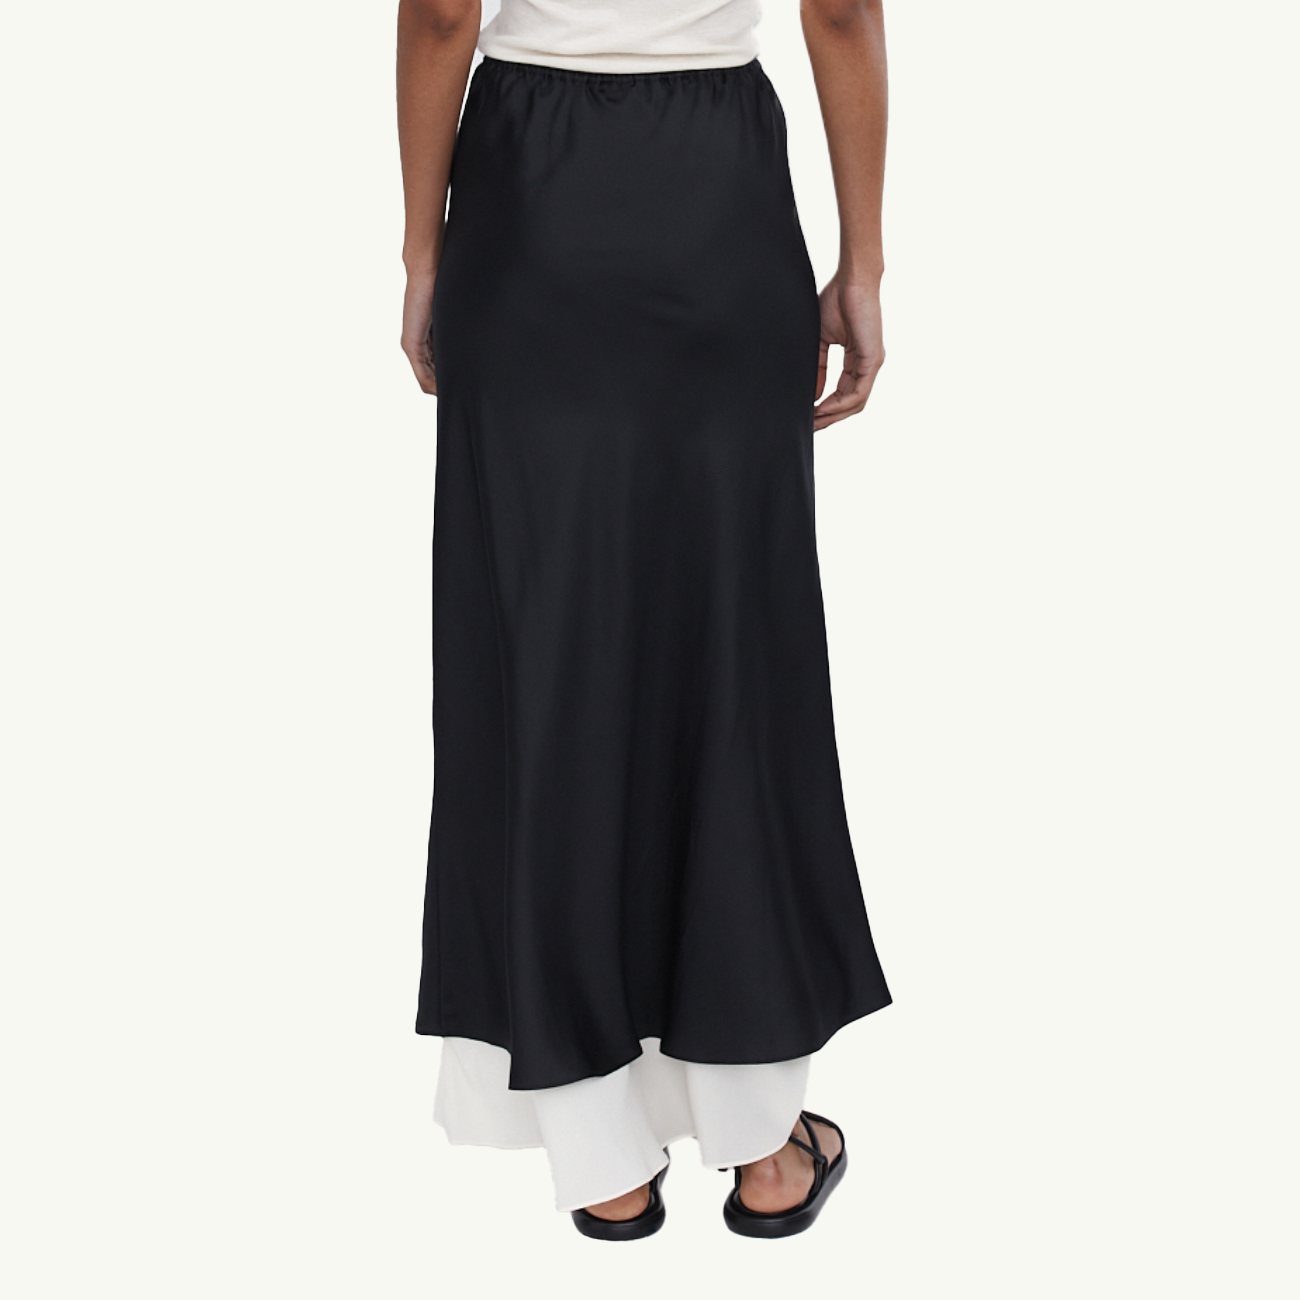 Charly Skirt - Black/Ivory